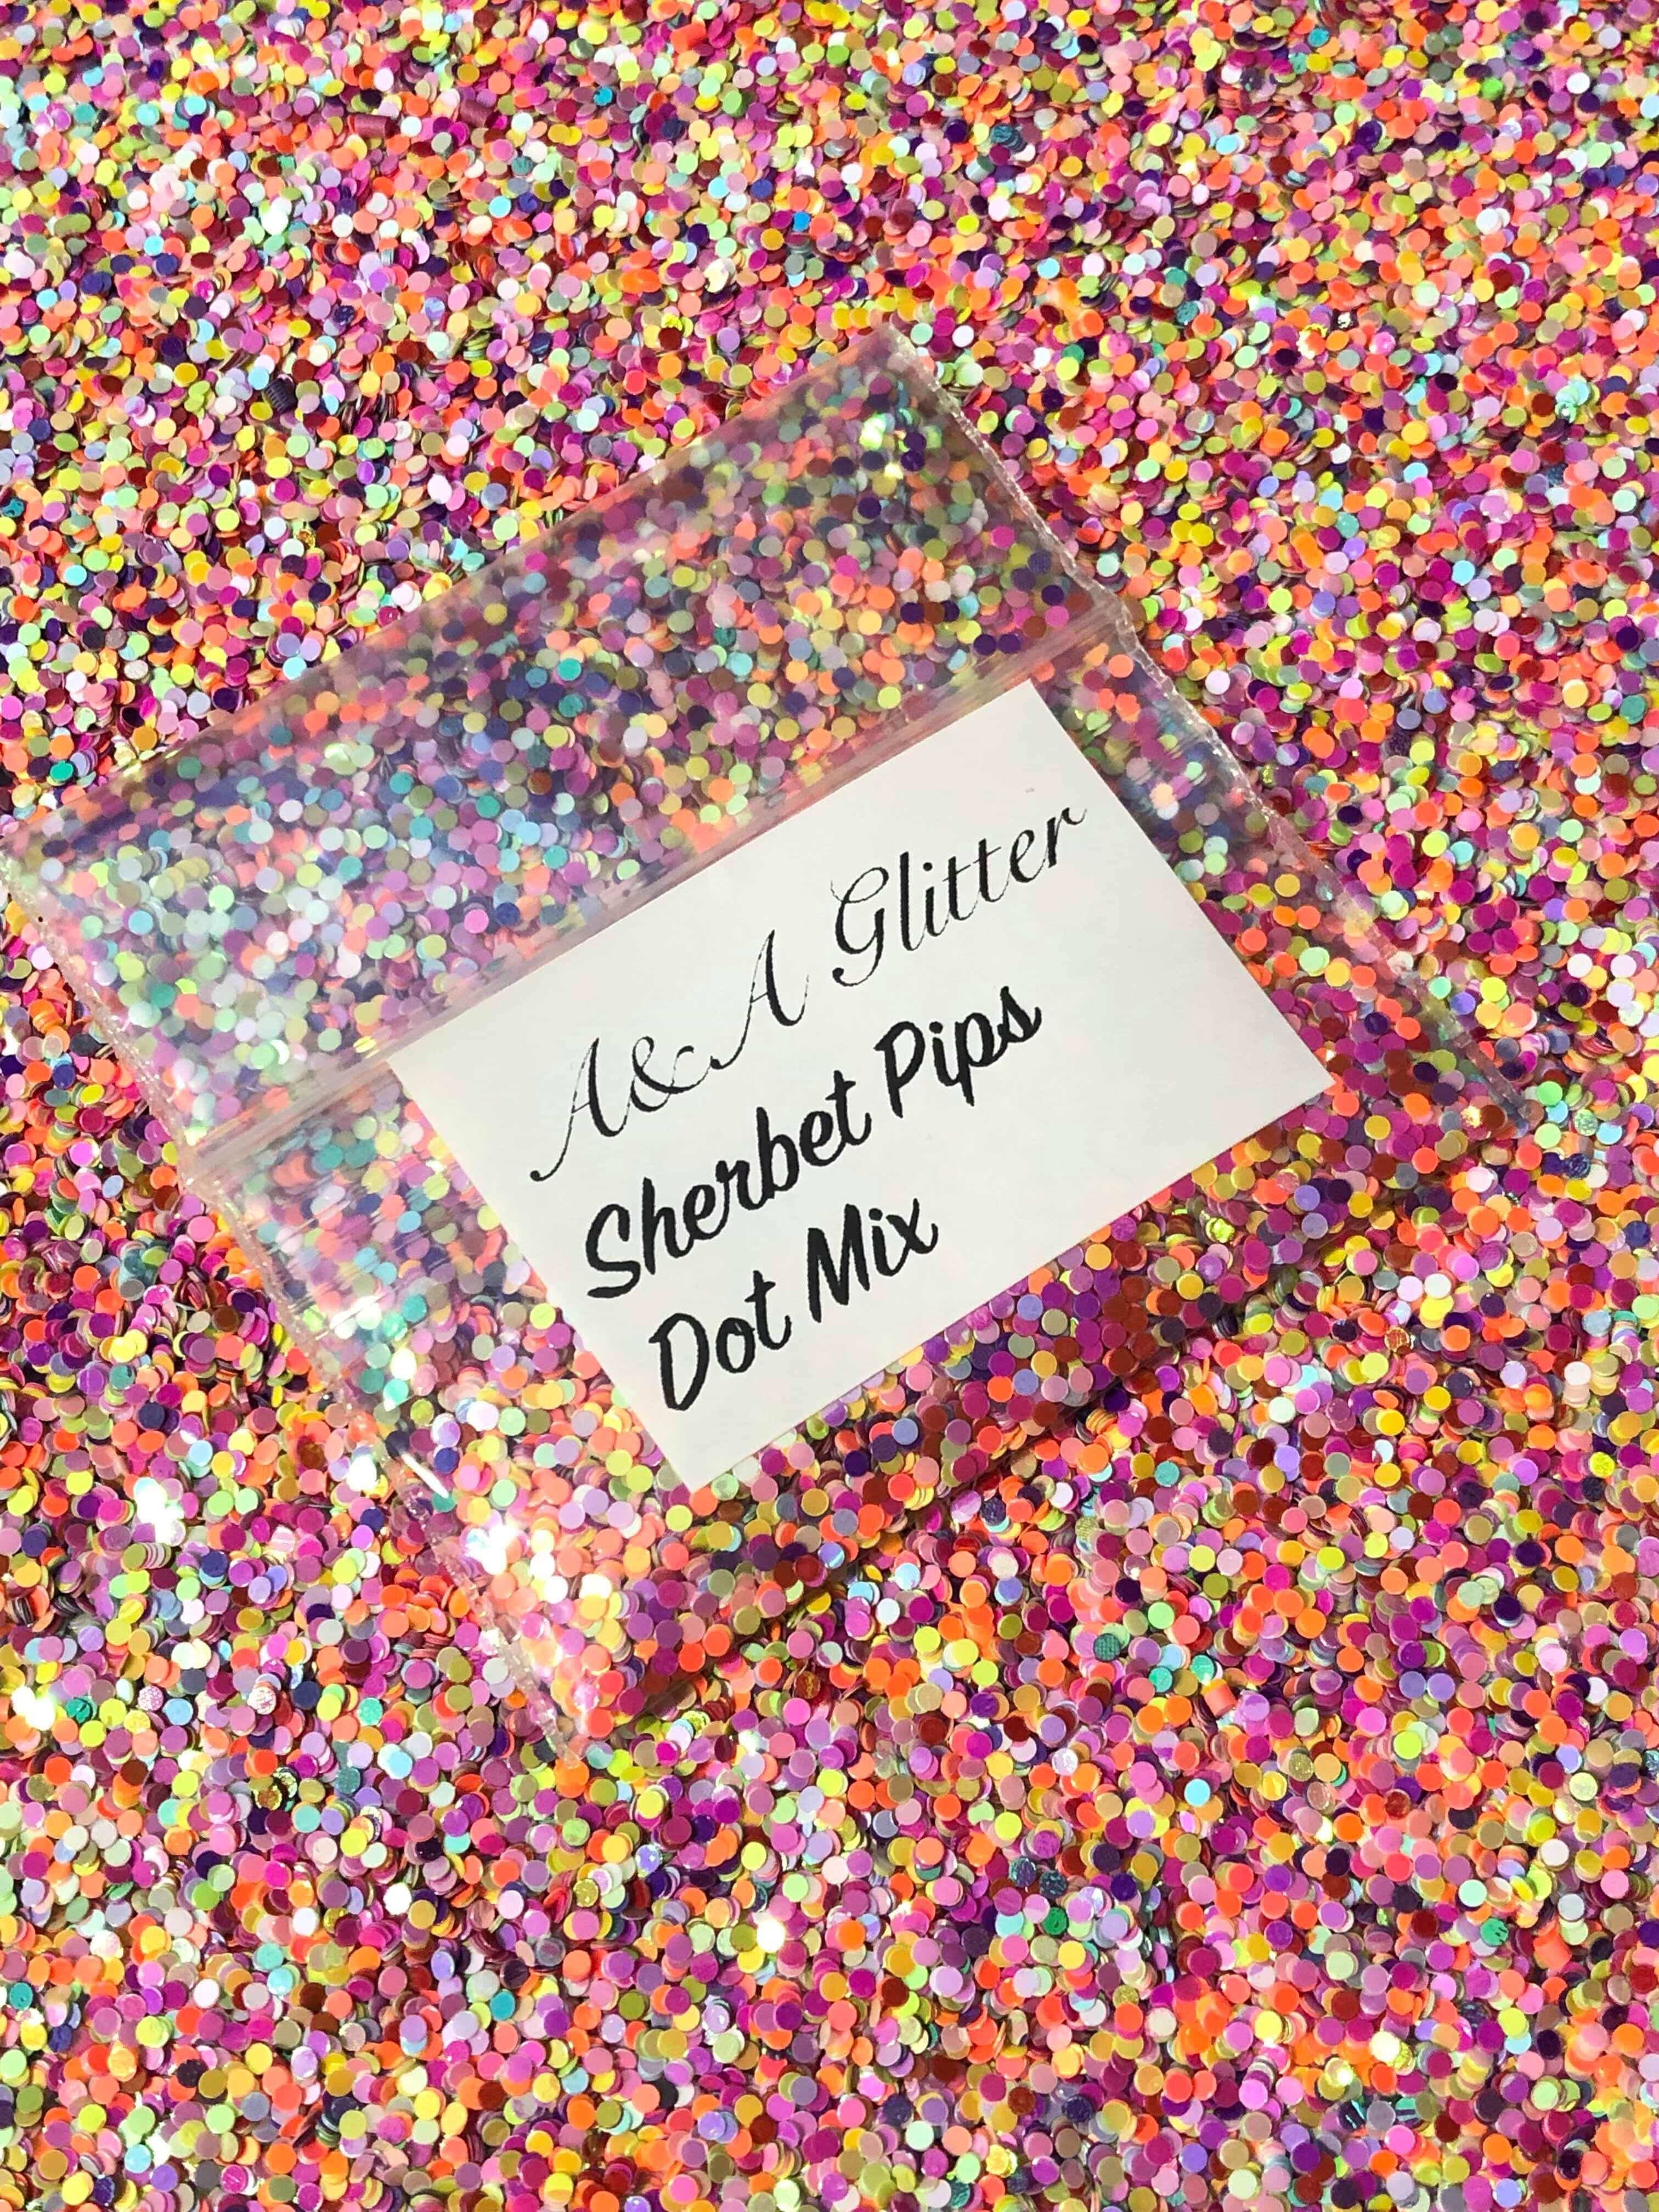 Sherbet Pips Dot Mix - A&A Glitter